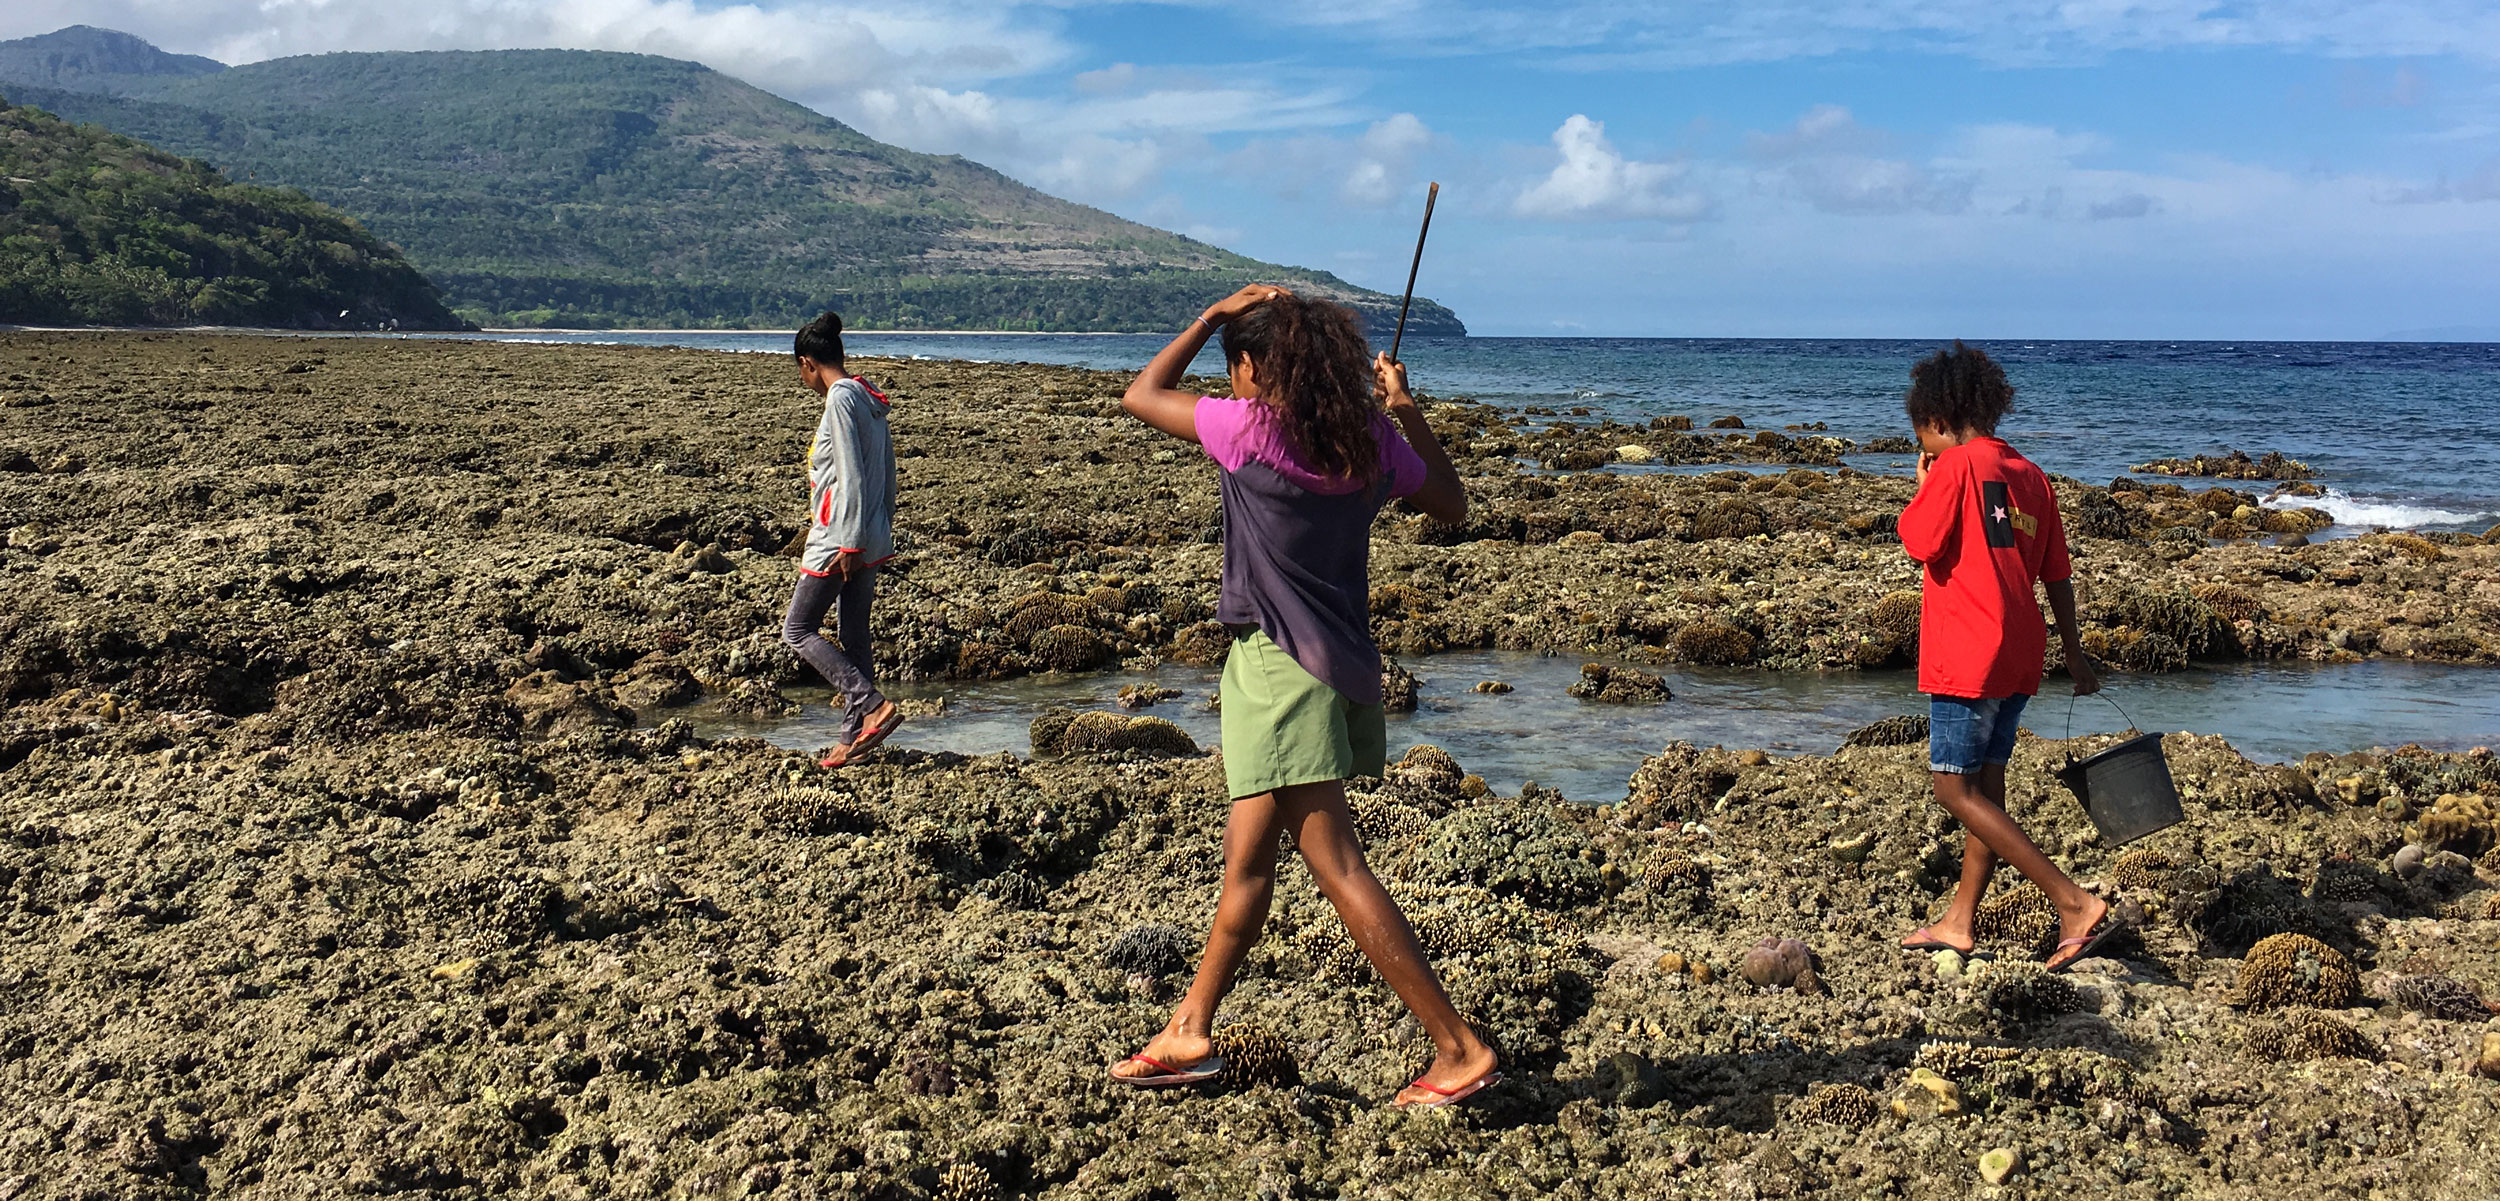 Women forage for marine animals on the rocky shore near Adara, a village on Atauro Island, Timor-Leste